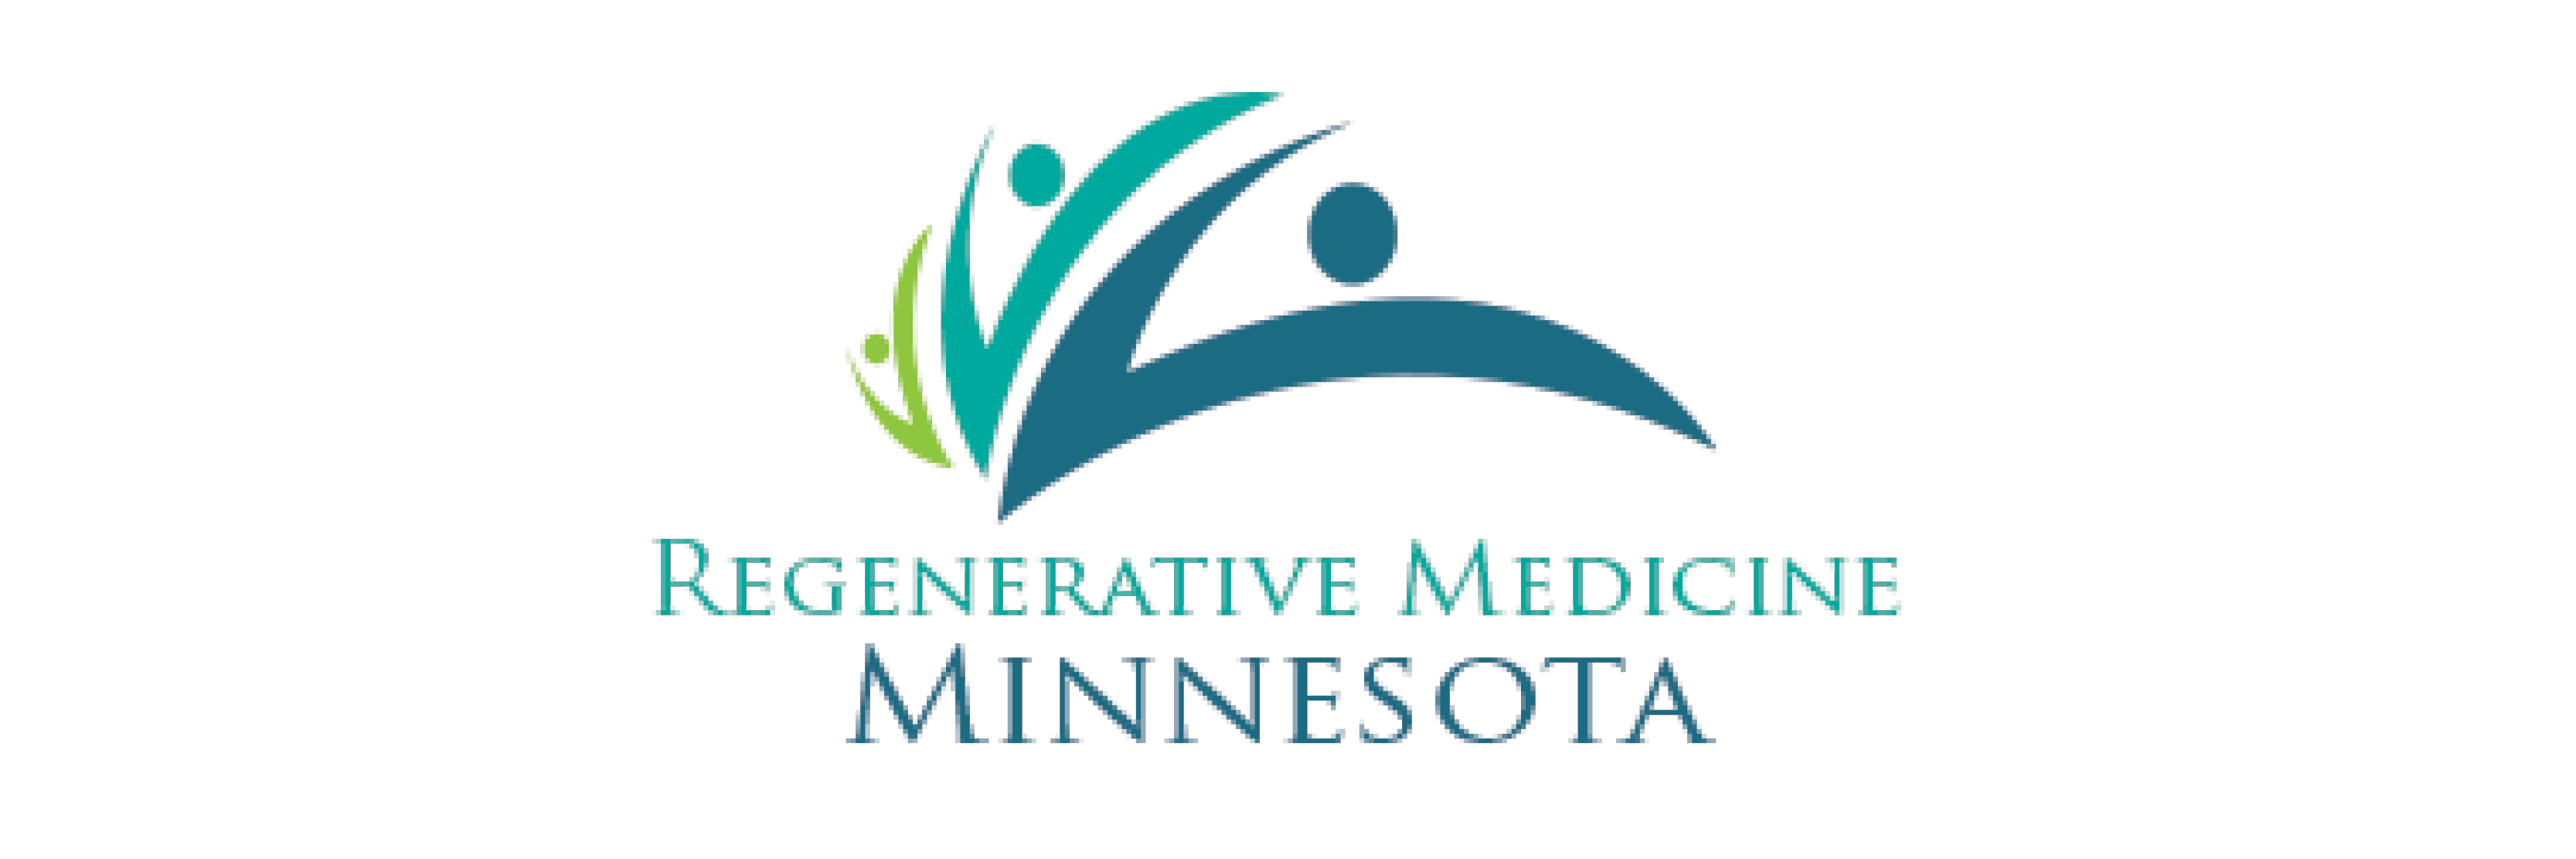 Regenerative Medicine Minnesota